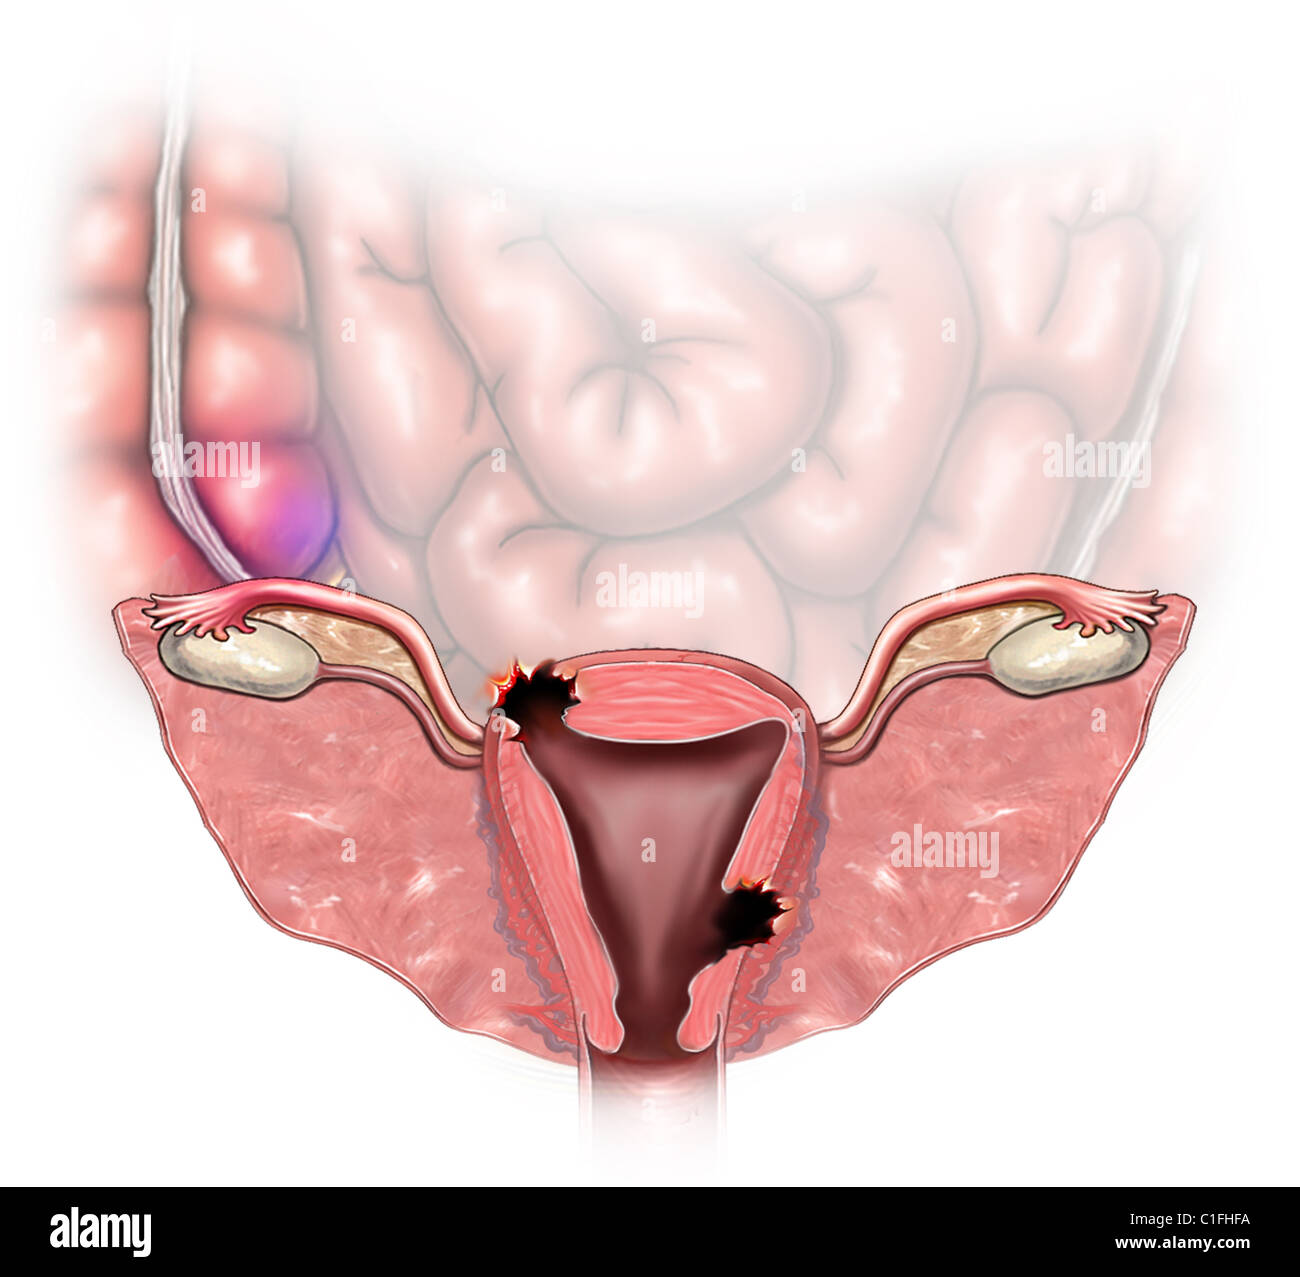 Esta ilustración médica revela un útero perforado. Foto de stock